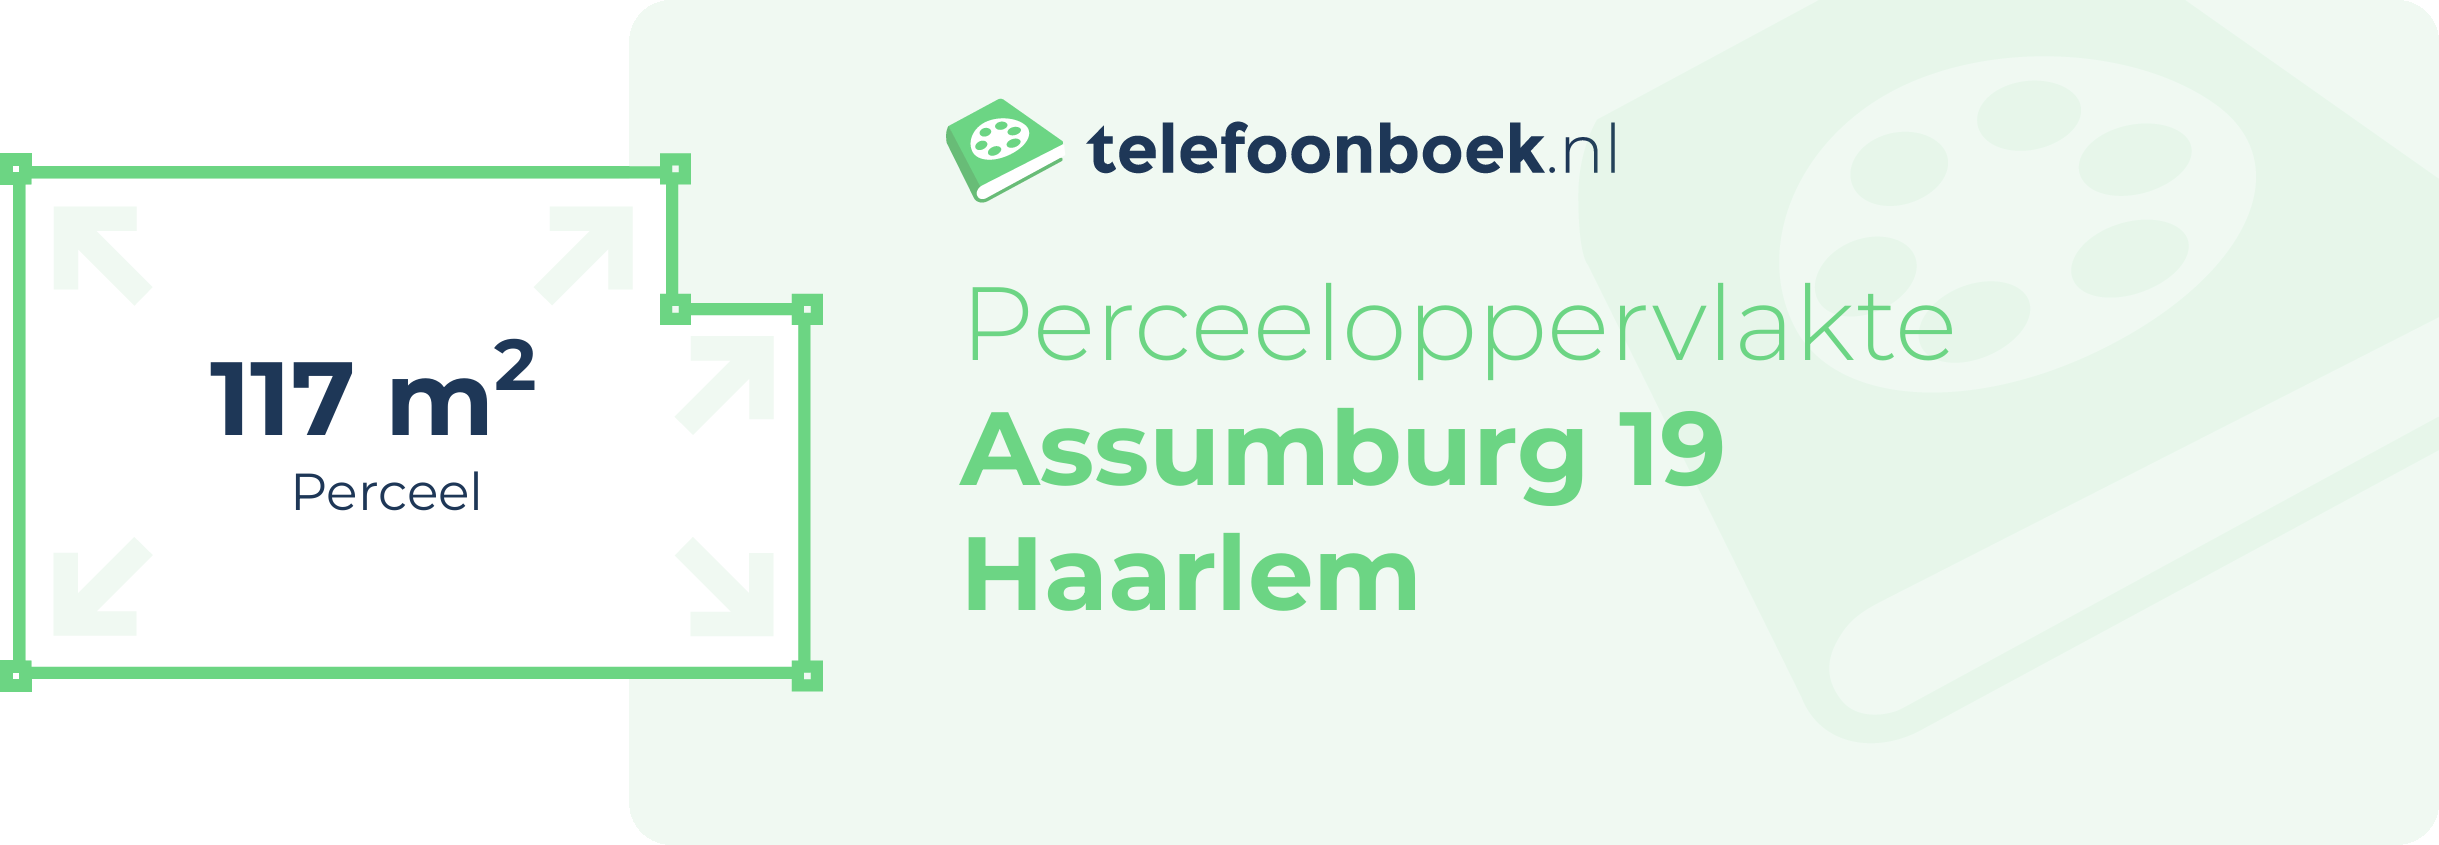 Perceeloppervlakte Assumburg 19 Haarlem